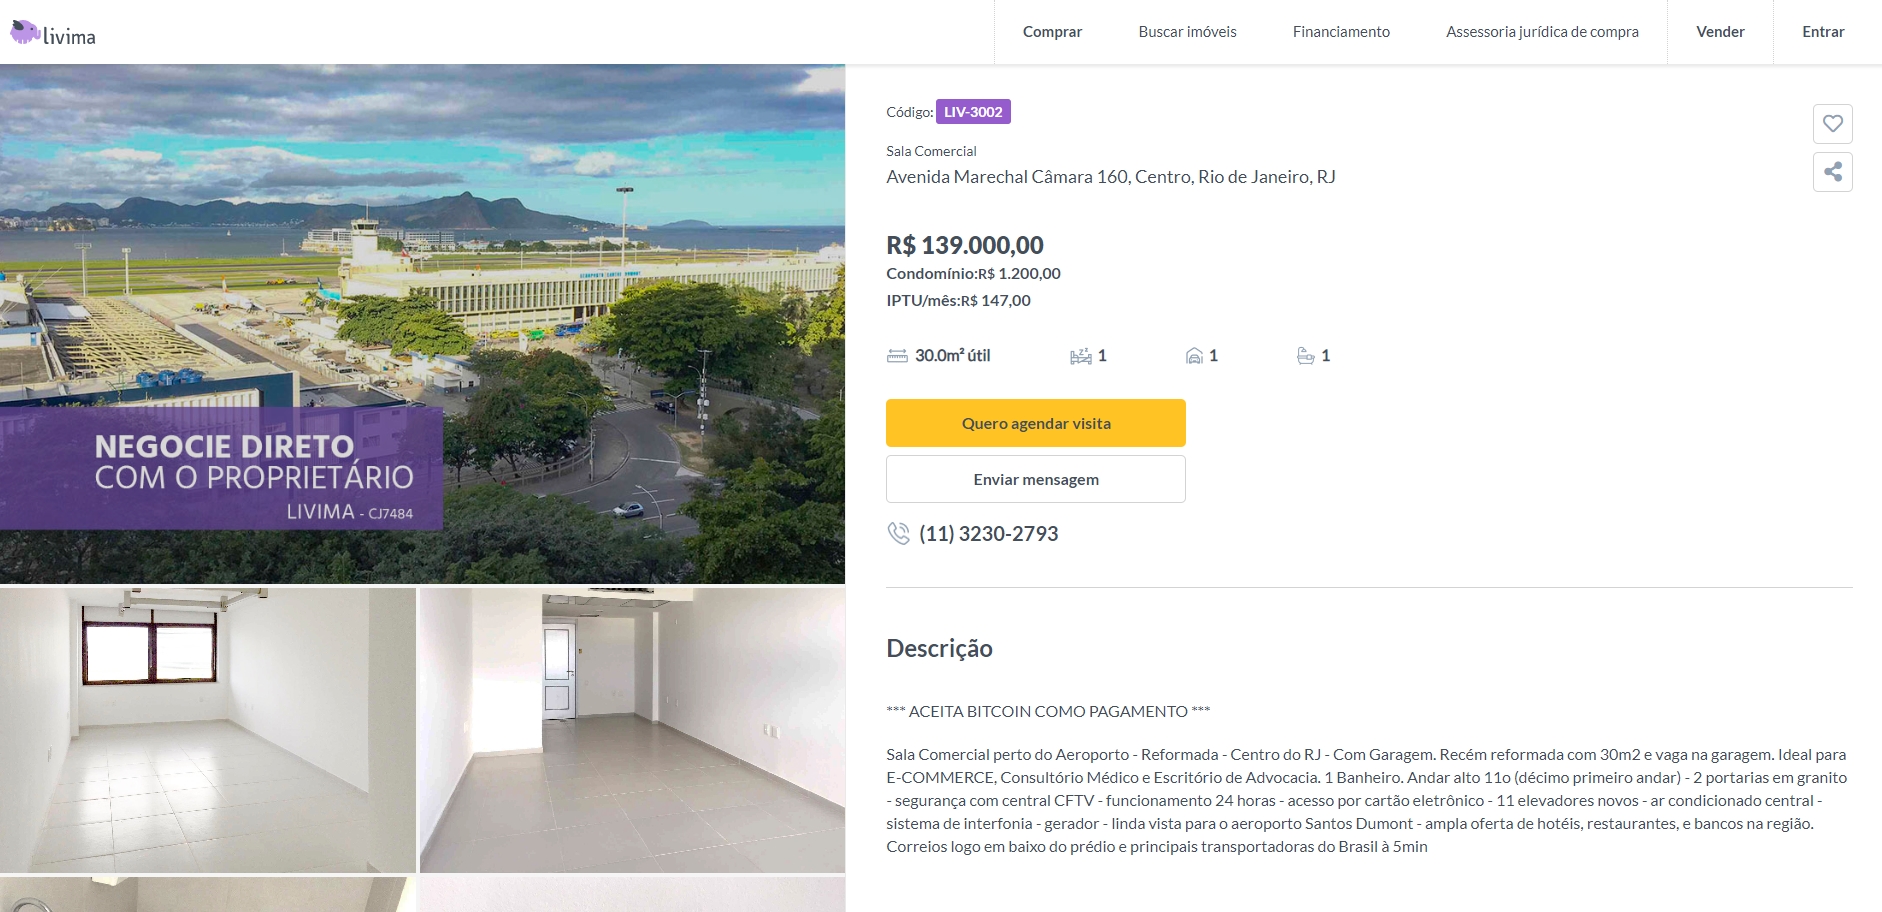 Sala comercial com vista para aeroporto Santos Dumont no Rio está sendo vendida por menos de 1 Bitcoin